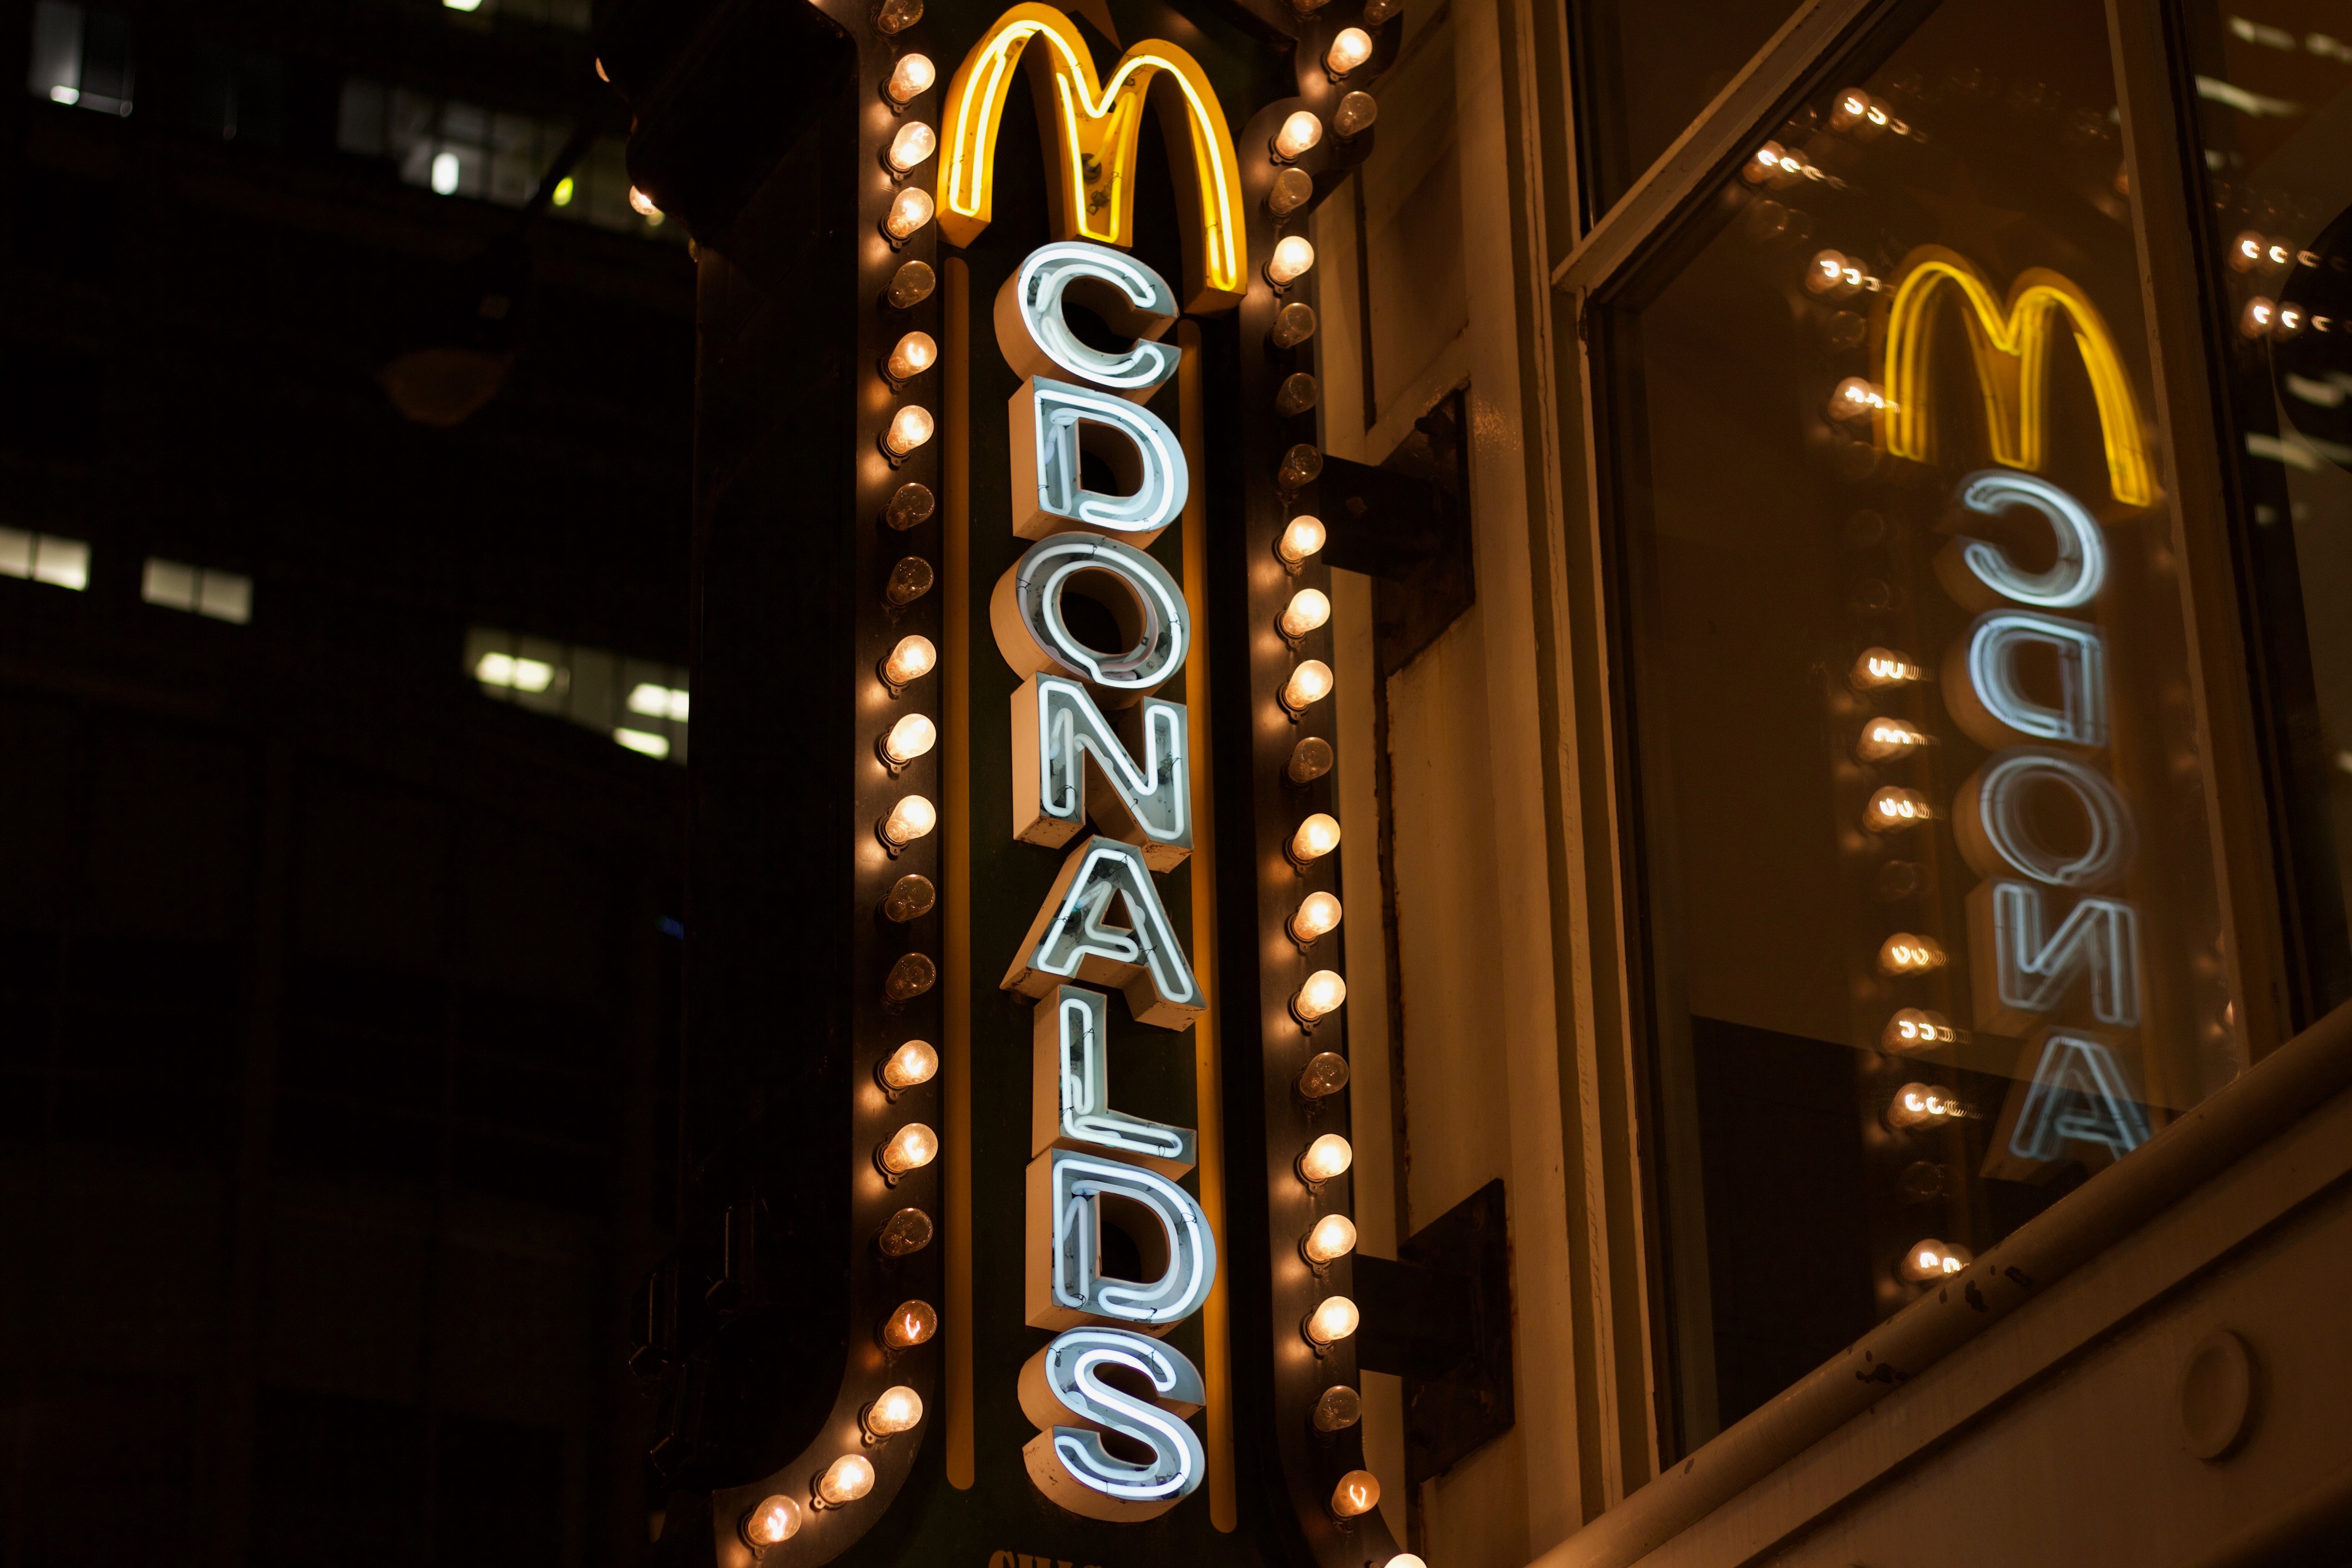 Shock defeat for McDonald’s as it’s stripped of its ‘Big Mac’ EU trade mark